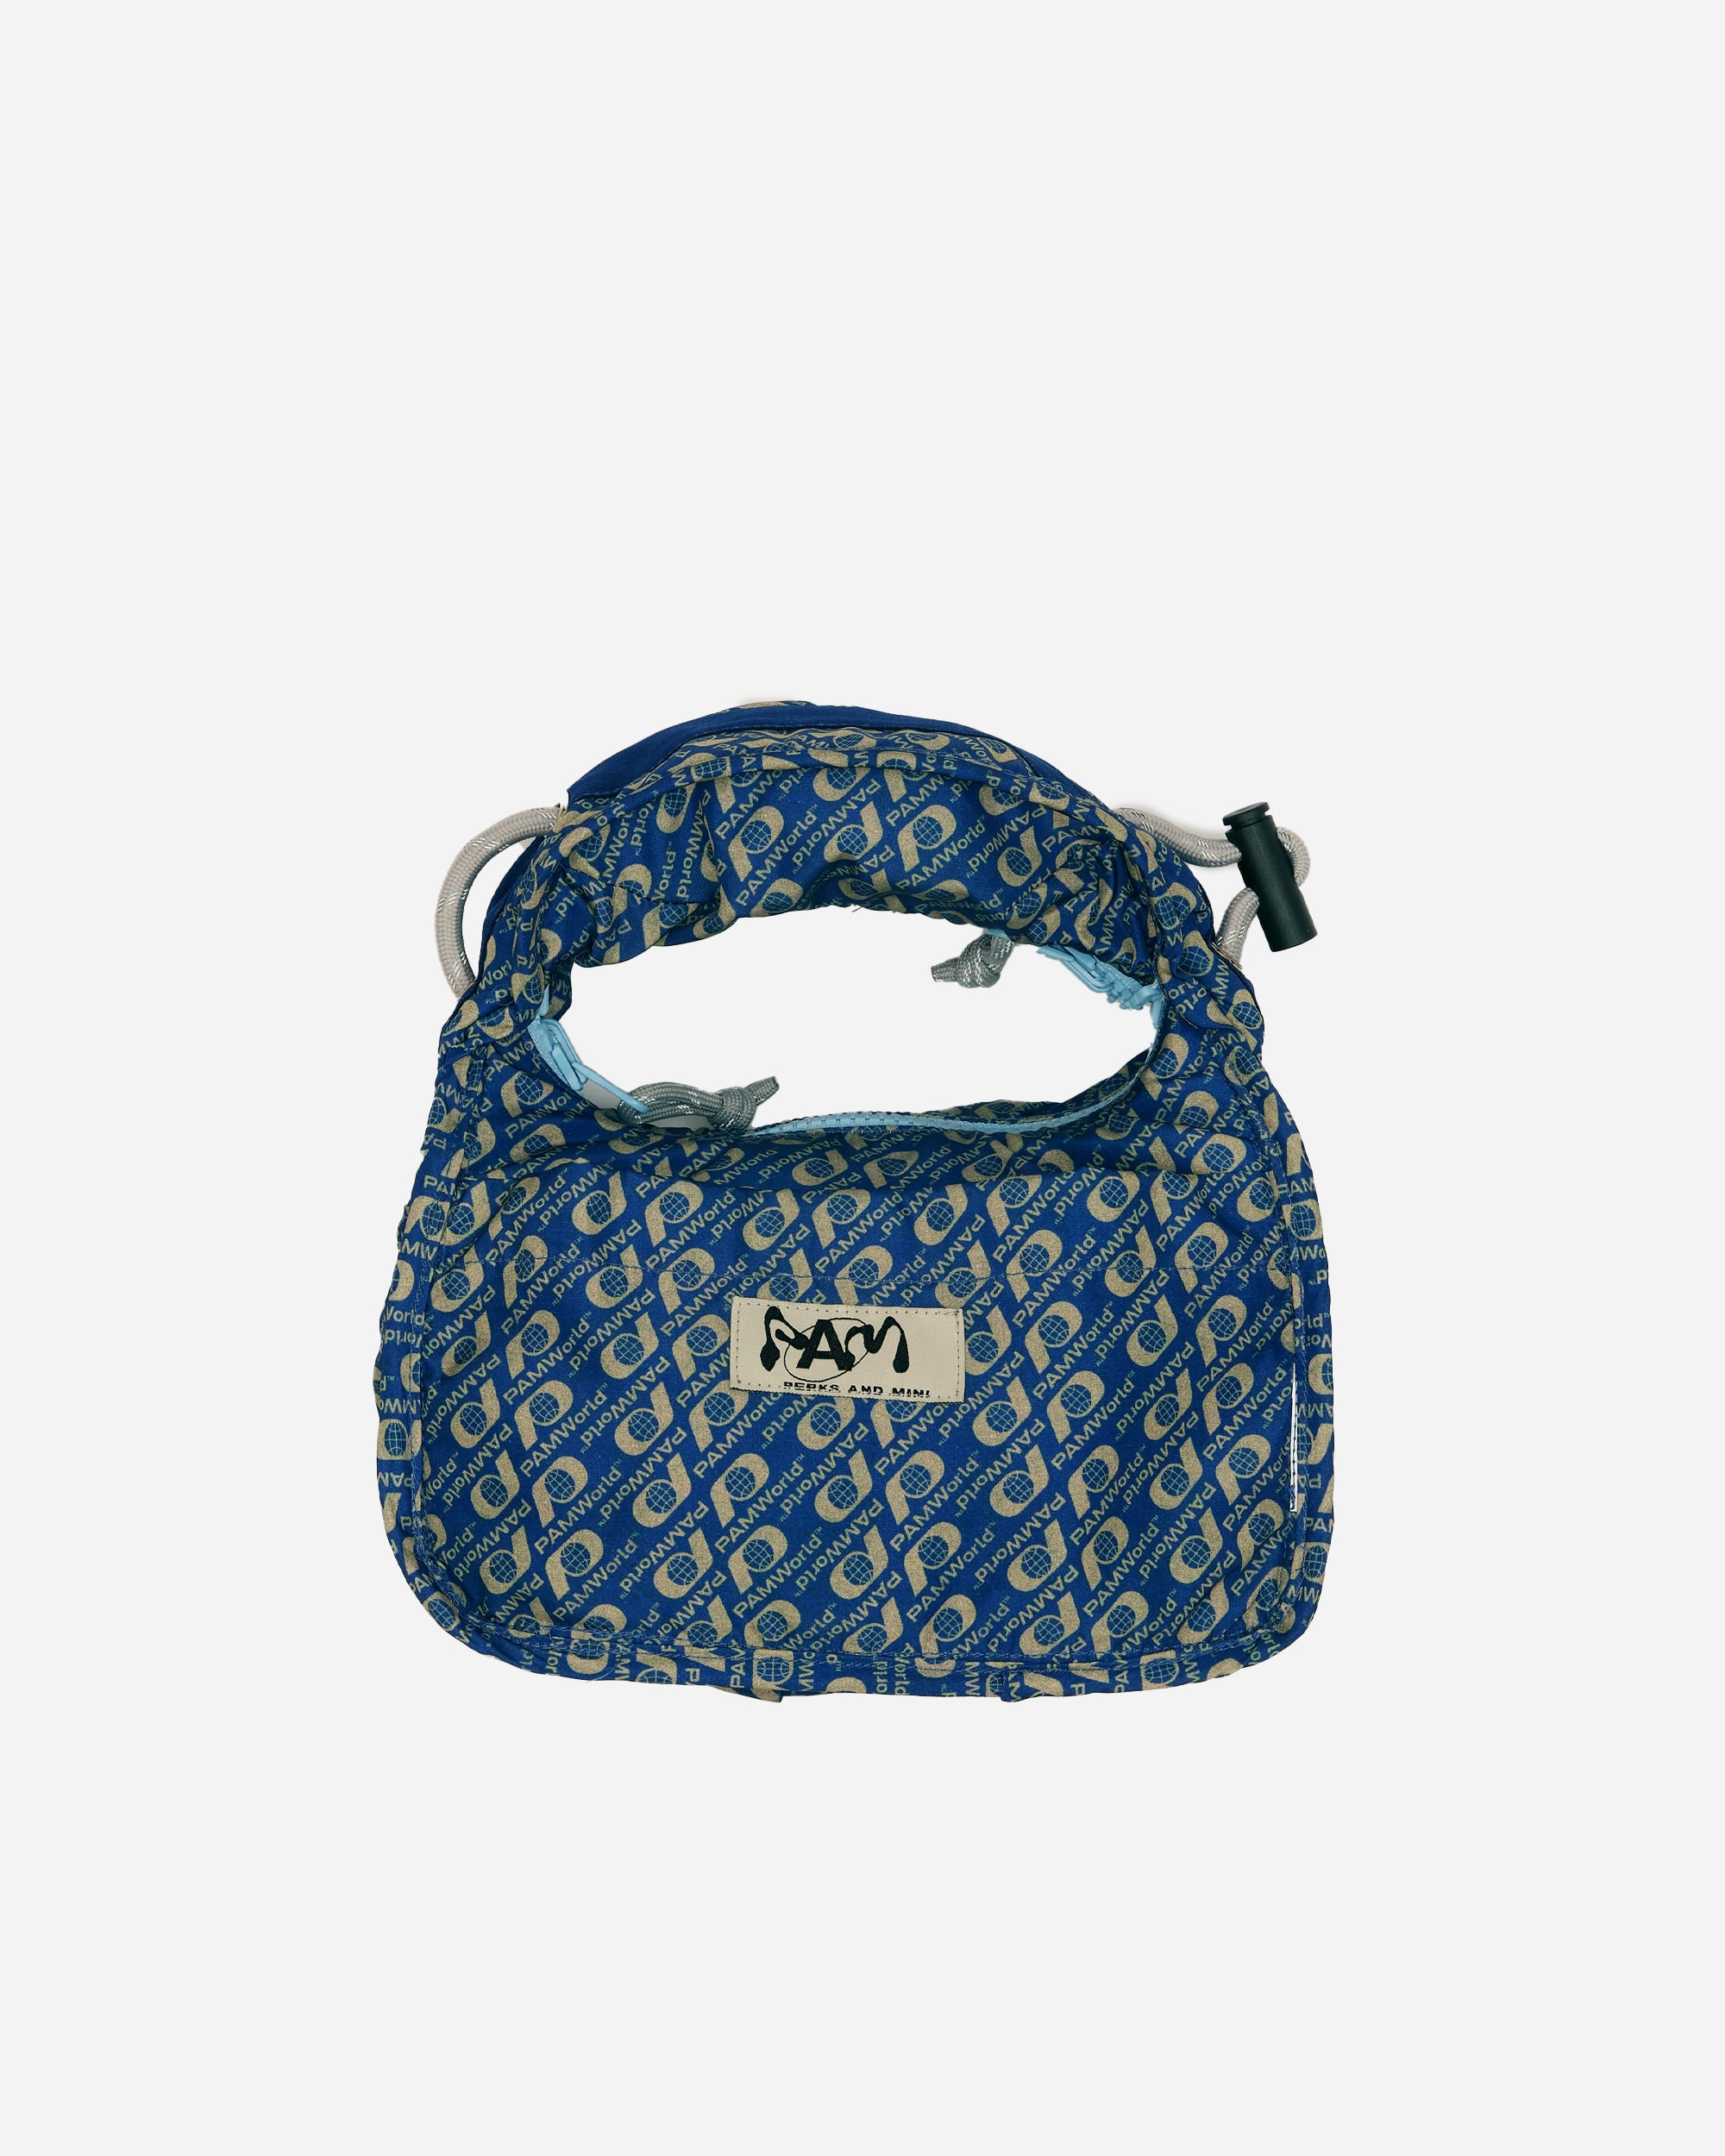 P.A.M Gateway Mini Tarot Bag B CHALK BLUE 10136/B-CHB